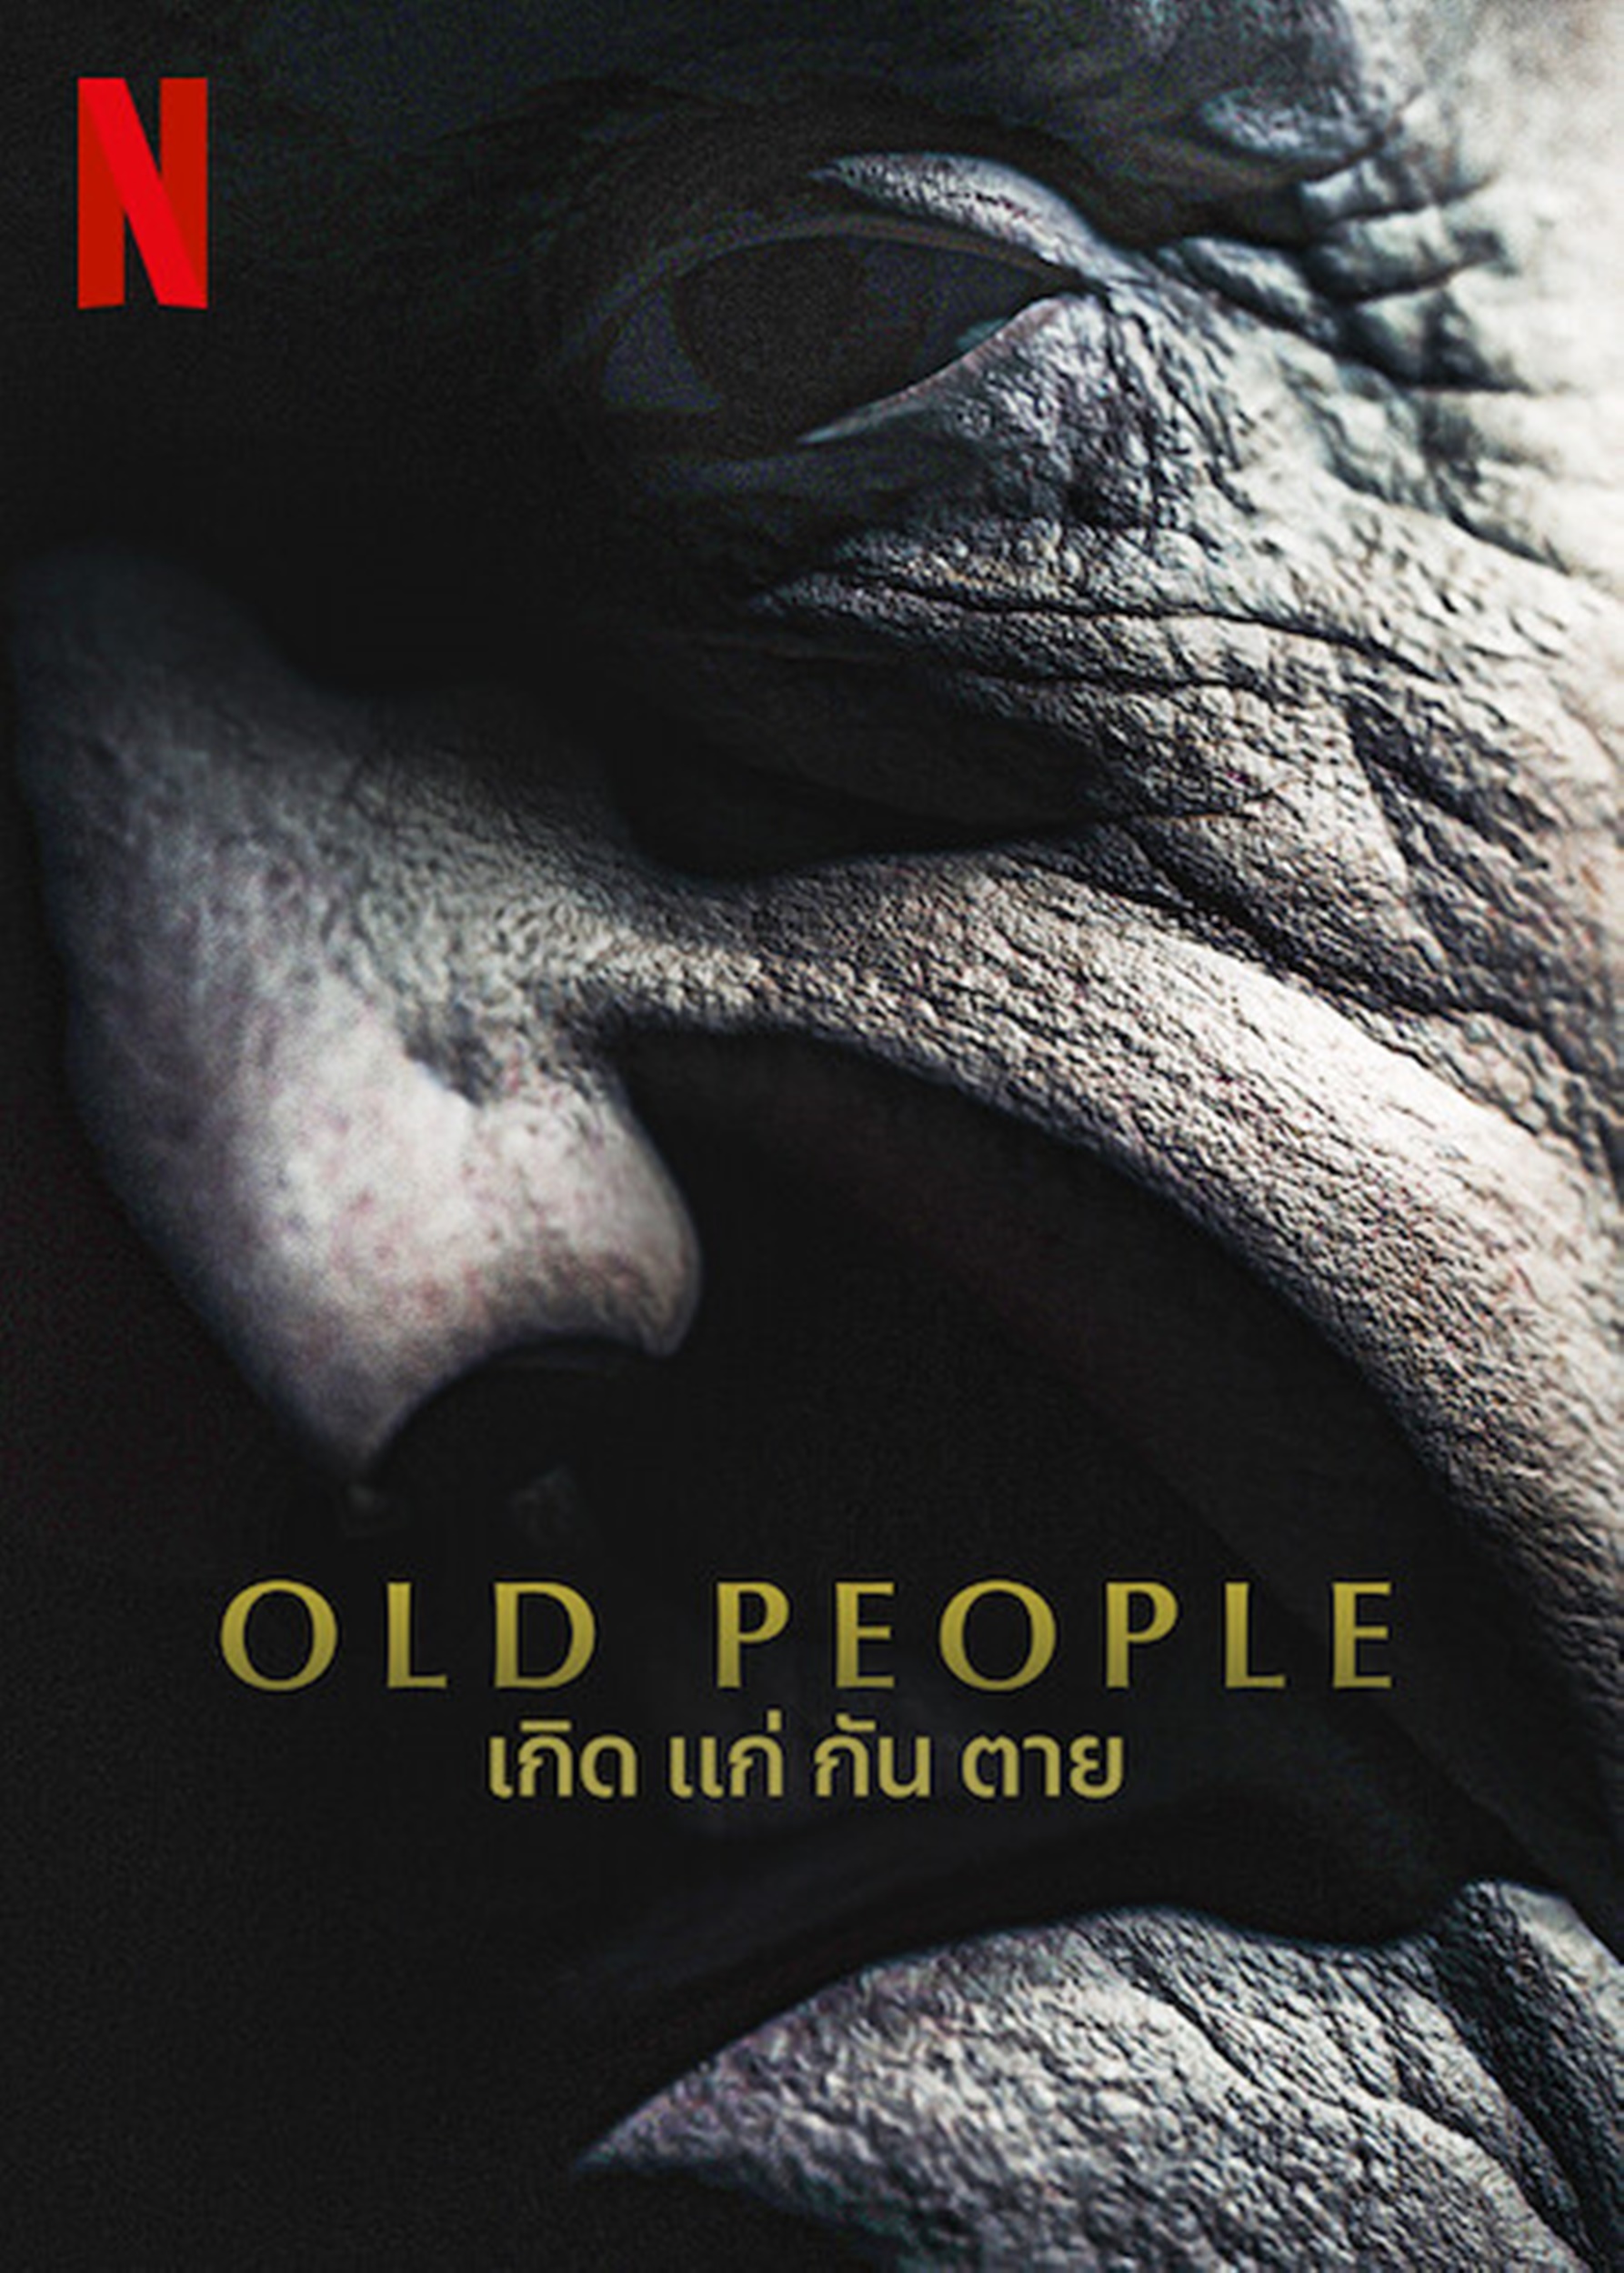 Old People (2022) เกิด แก่ กัน ตาย